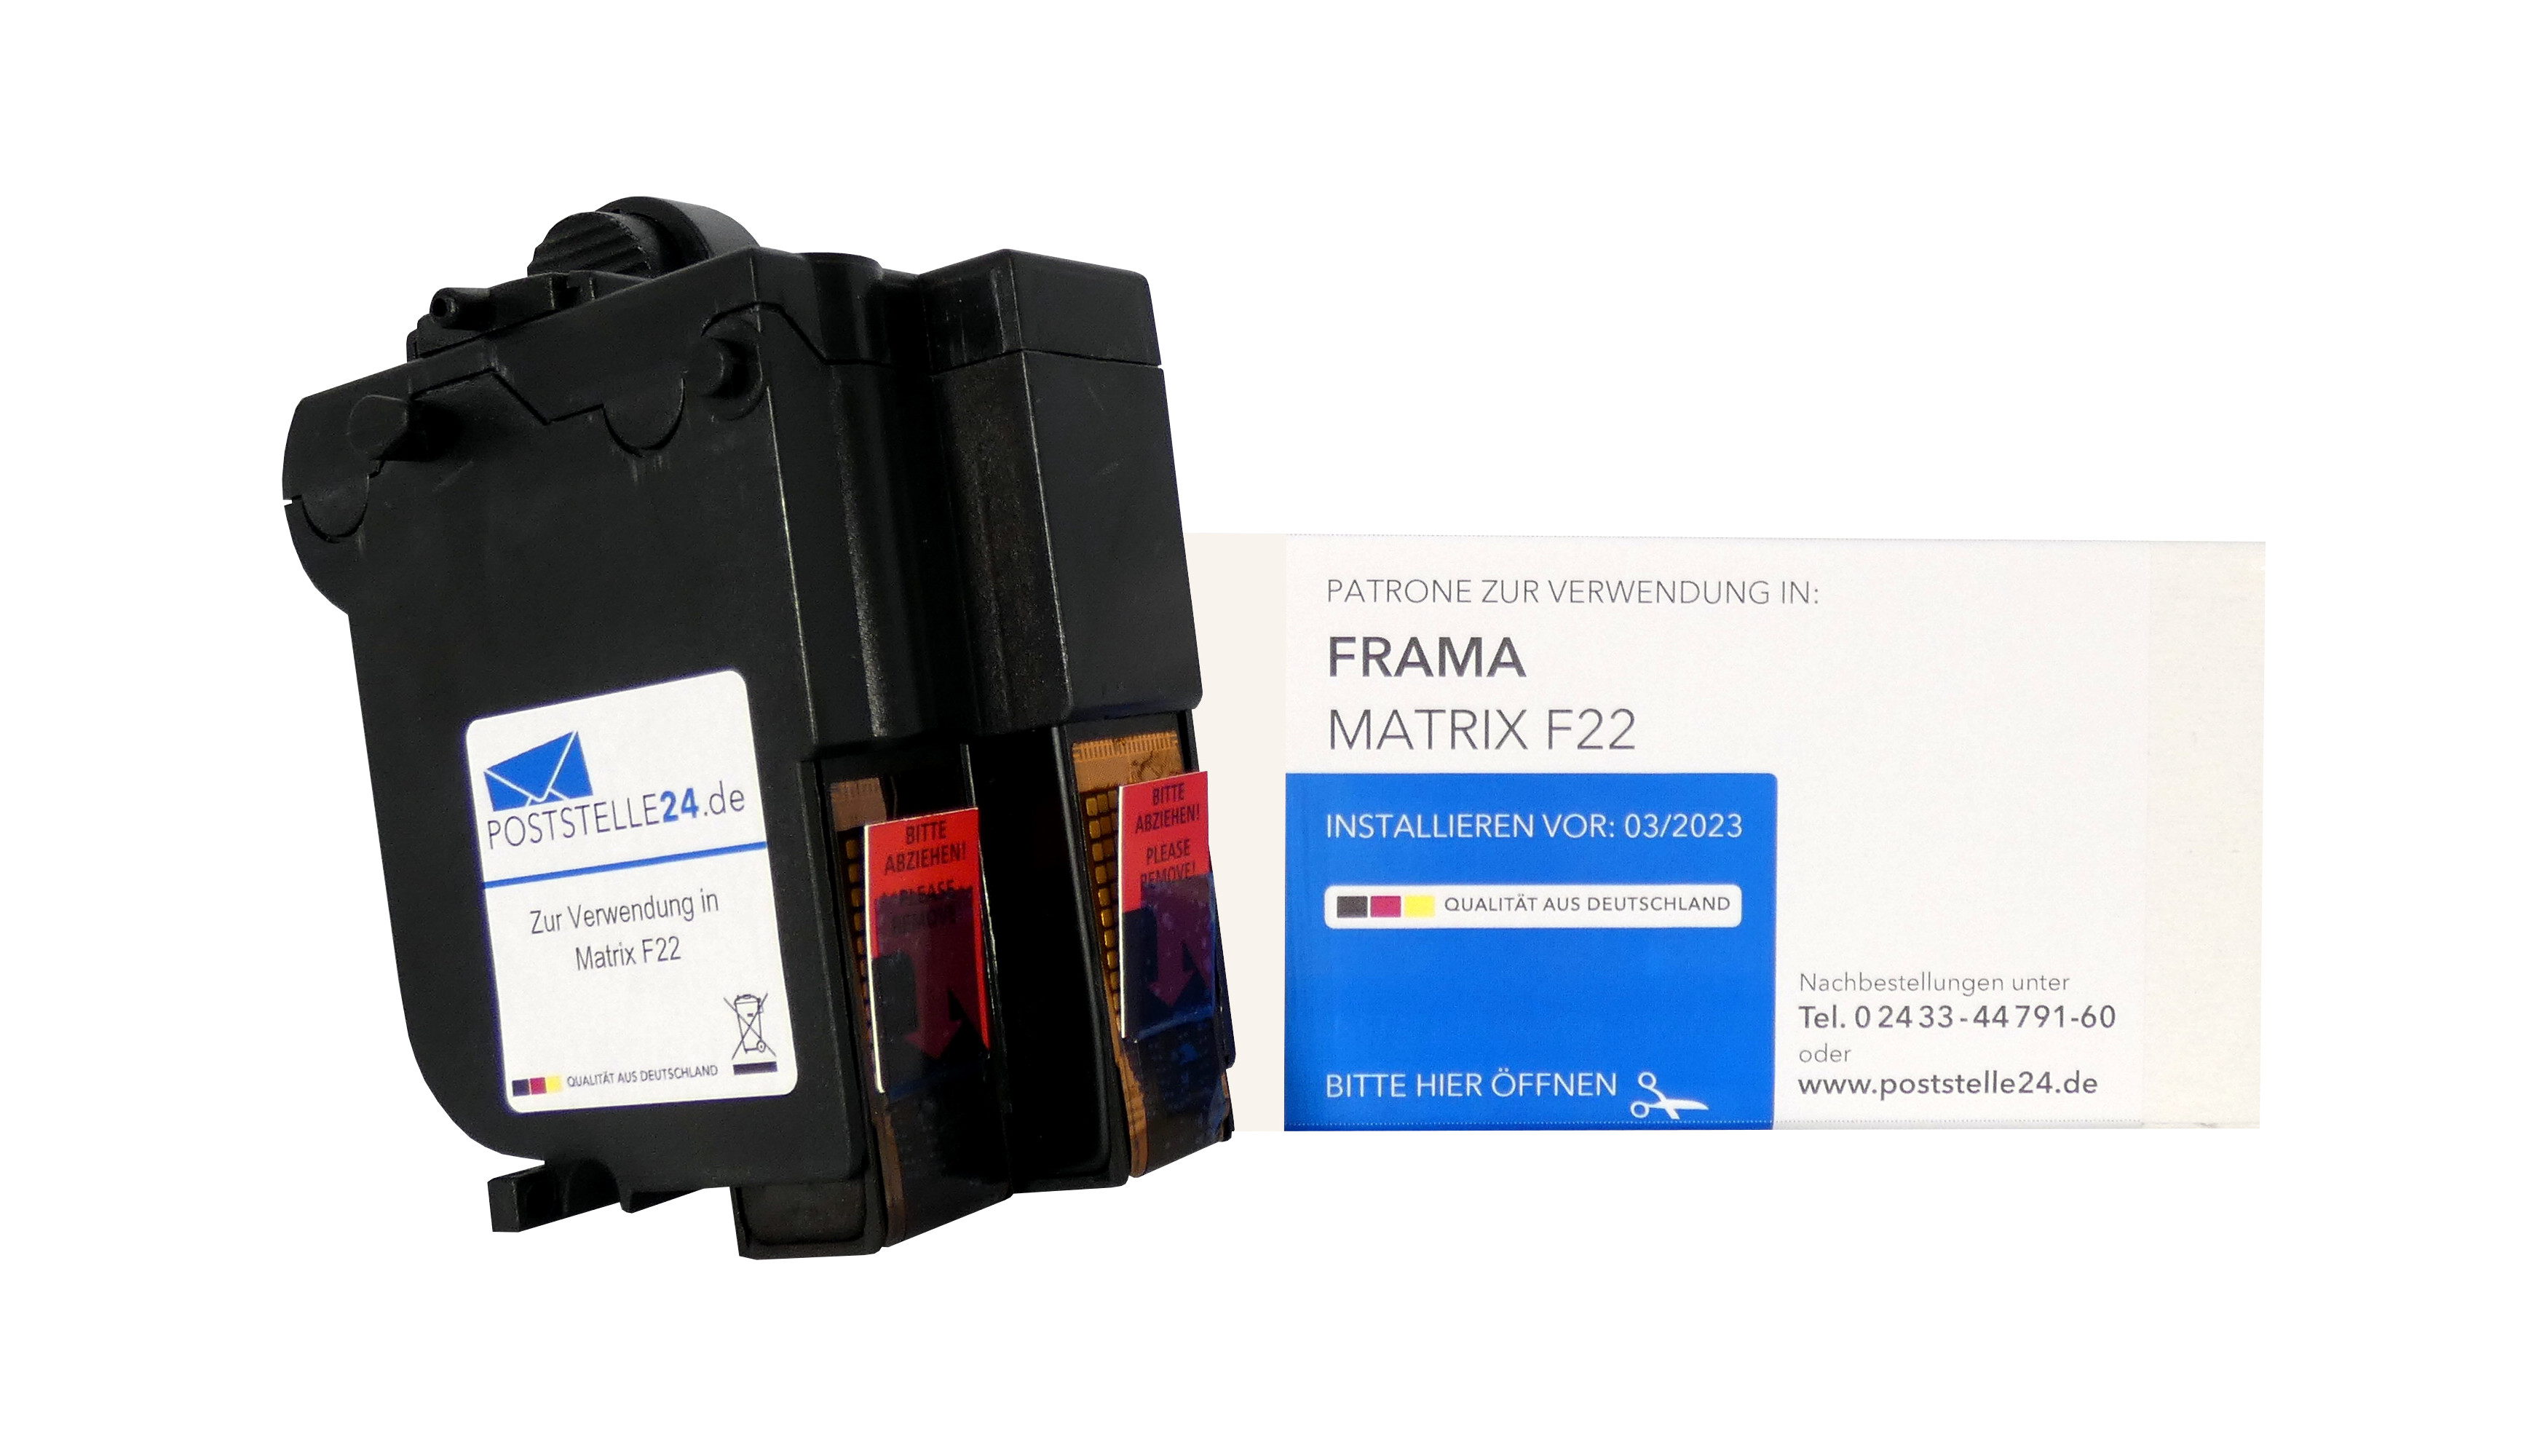 remanufactured cartridge for use in Frama Matrix F22